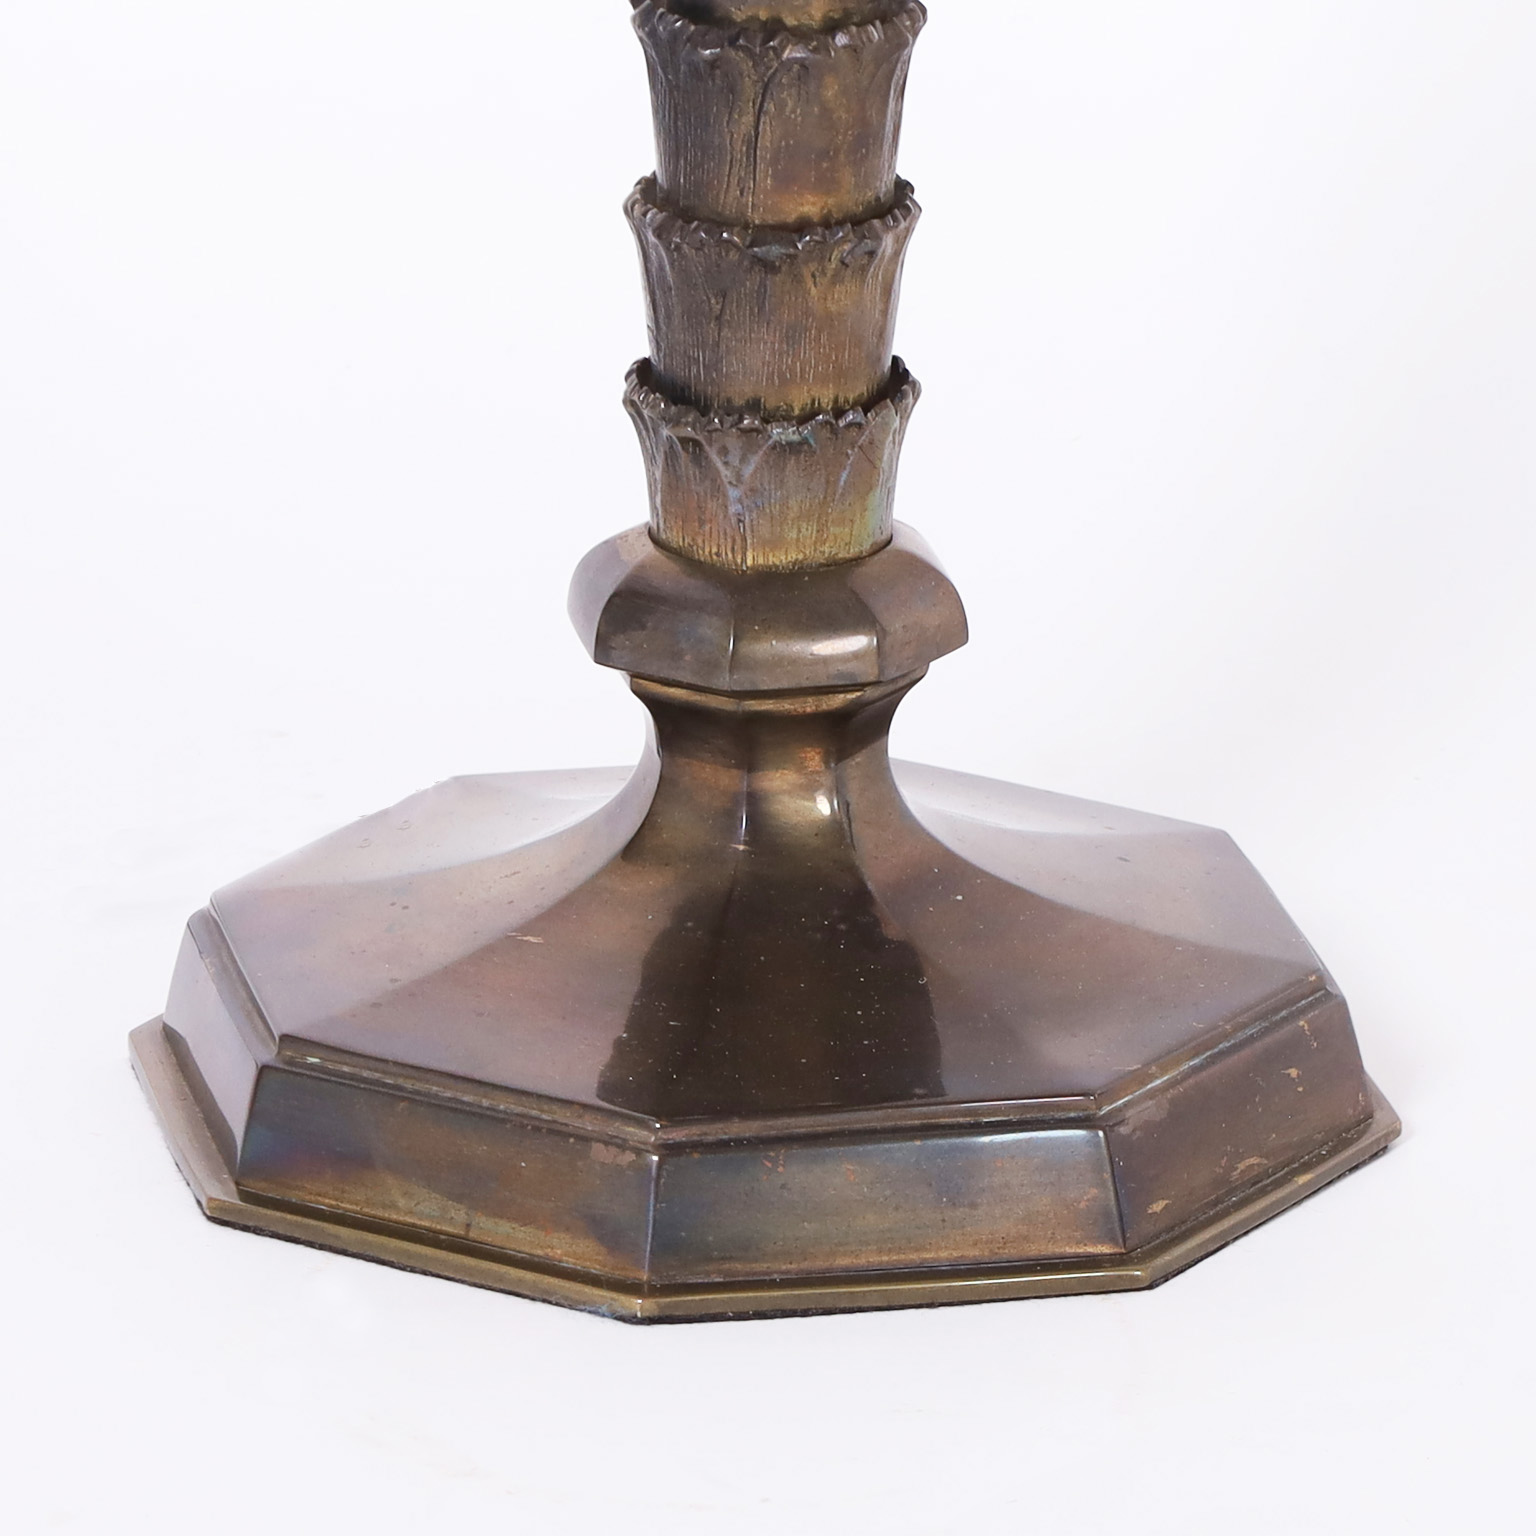 Mid Century Bronze Palm Tree Table Lamp